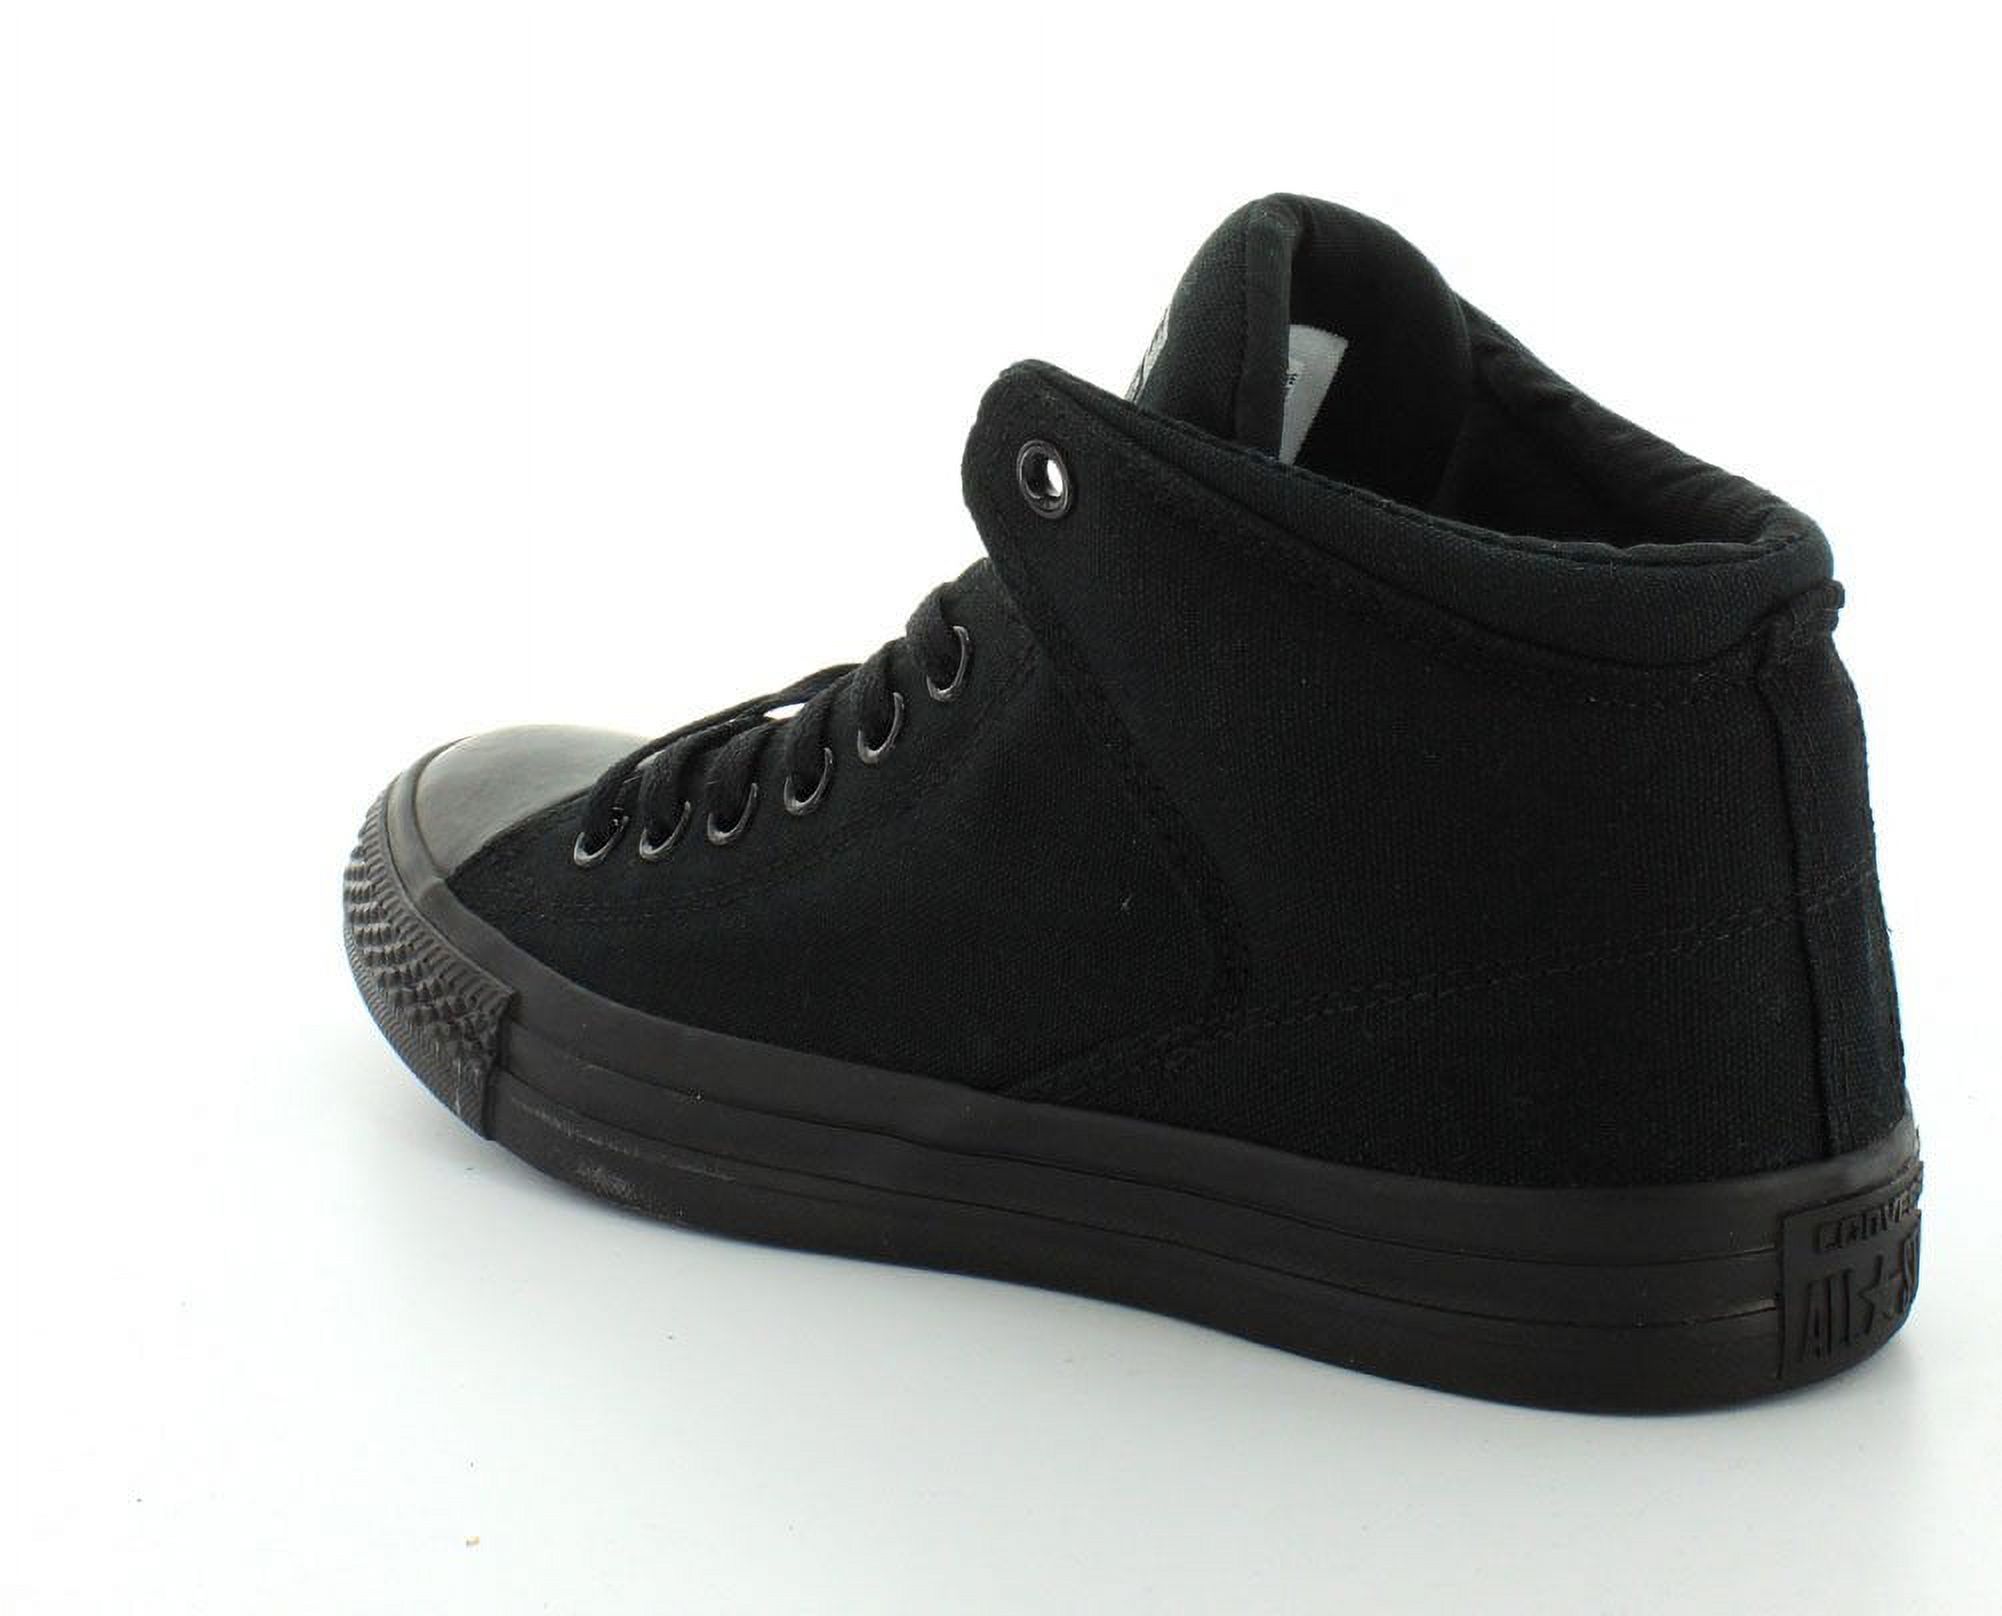 Converse Men's Street Canvas High Top Sneaker, Black/Black/Black, 12 M US - image 3 of 5